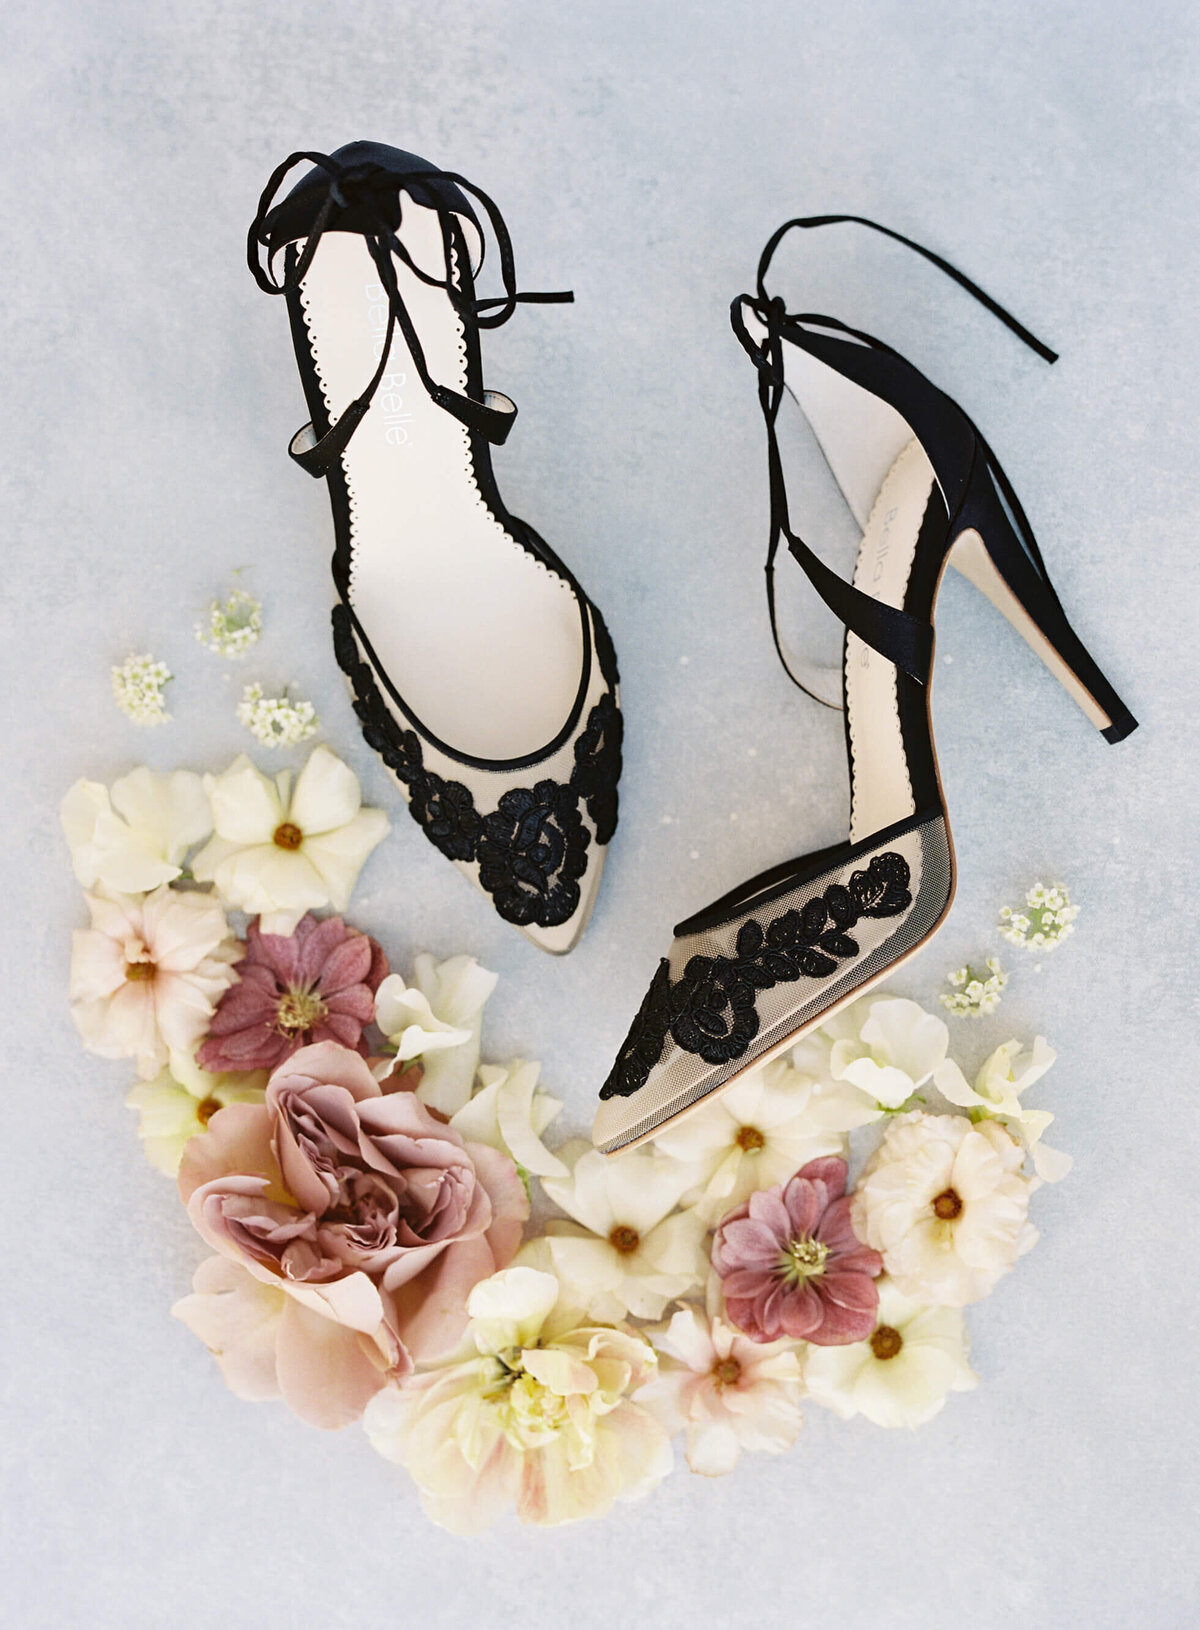 Sunstone-Winery- Destination Wedding Florist - Luxury Wedding Flowers - Autumn Marcelle Design (266)